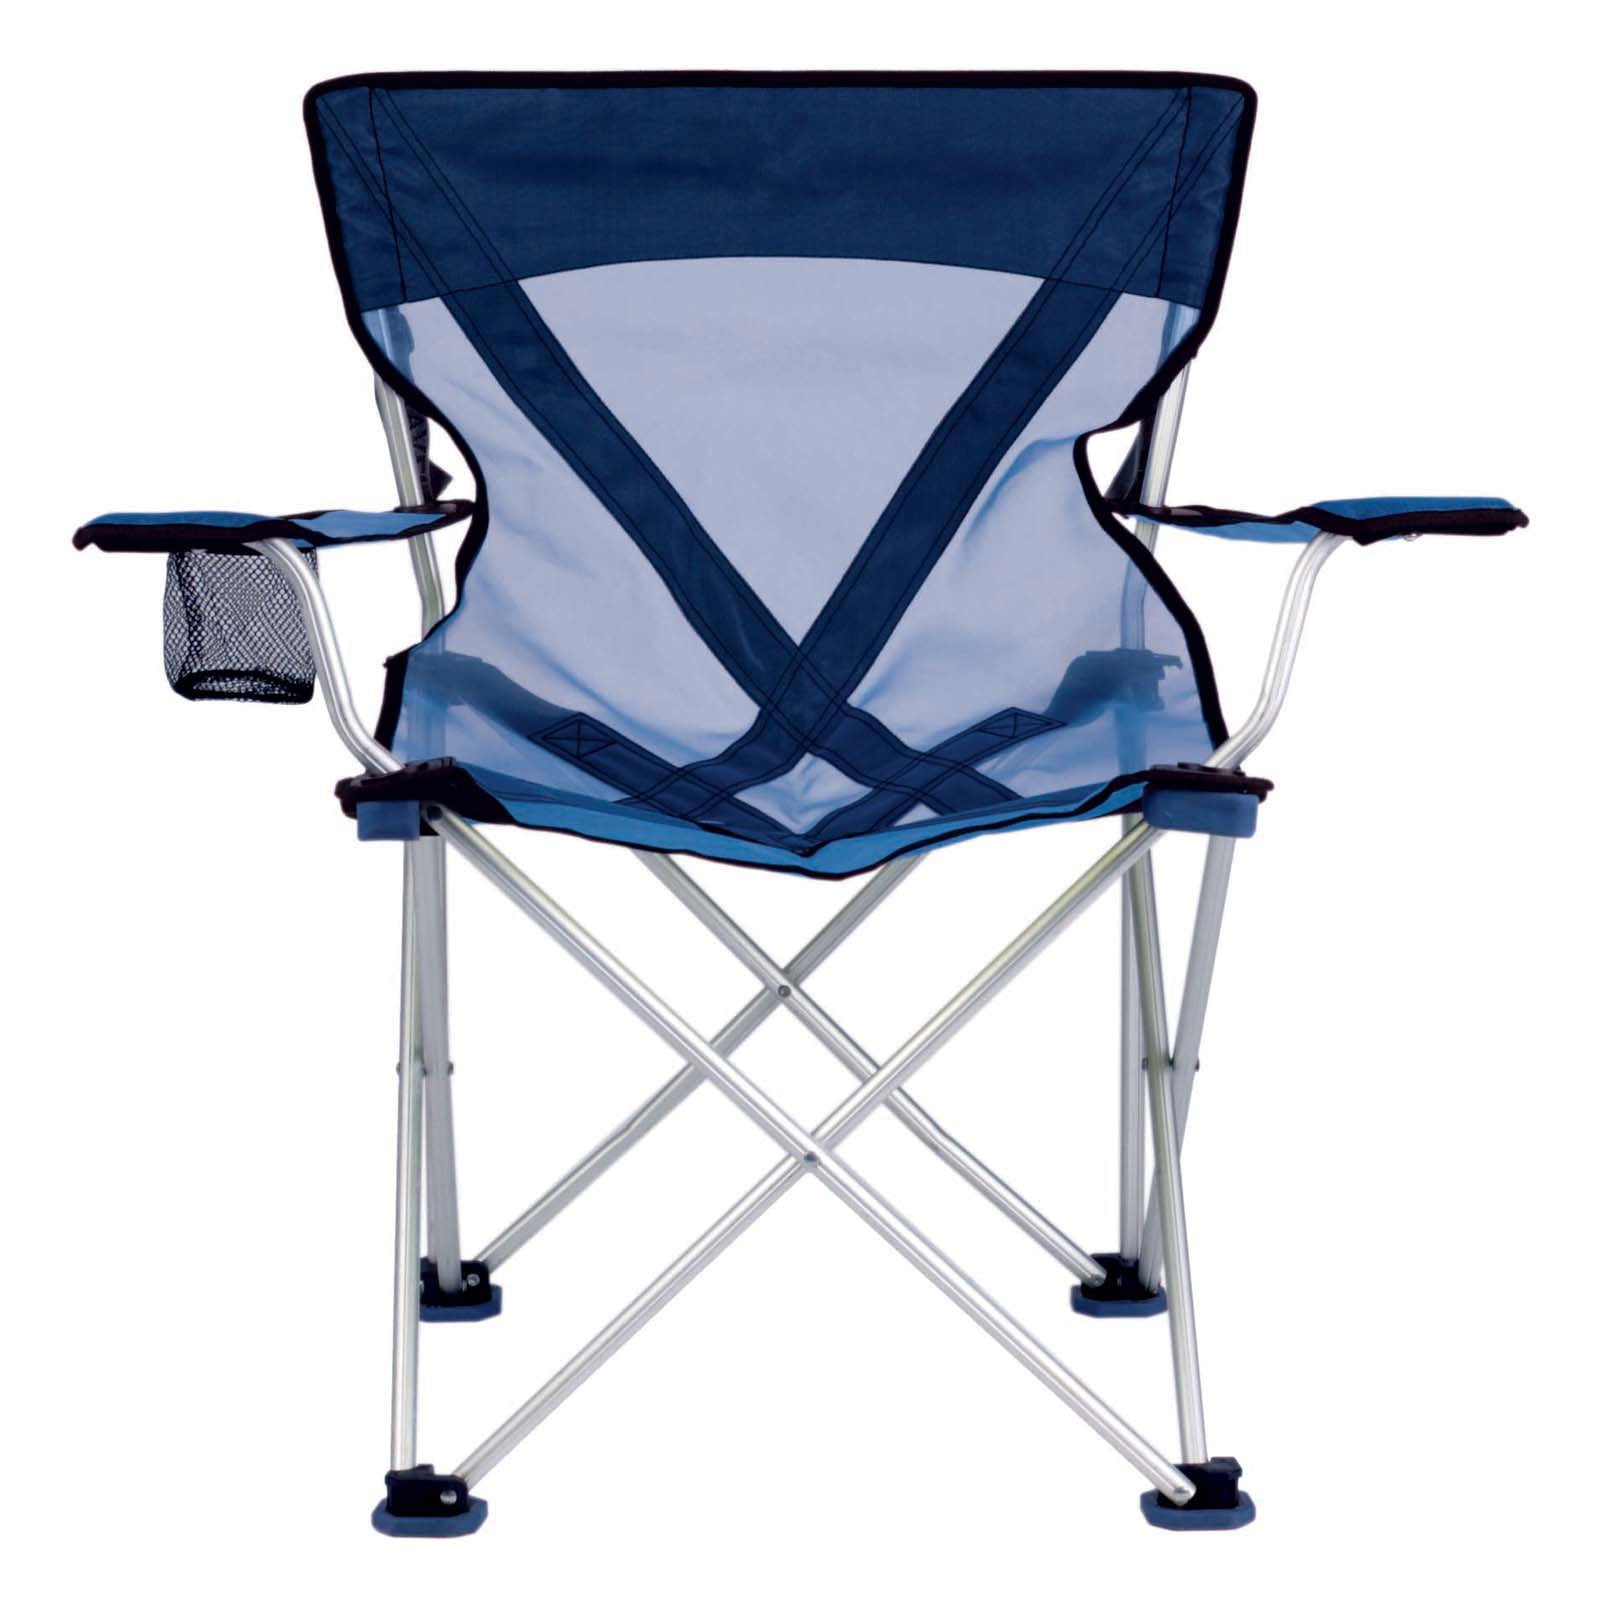 Travelchair Teddy Steel Camping Chair Blue Walmart Com